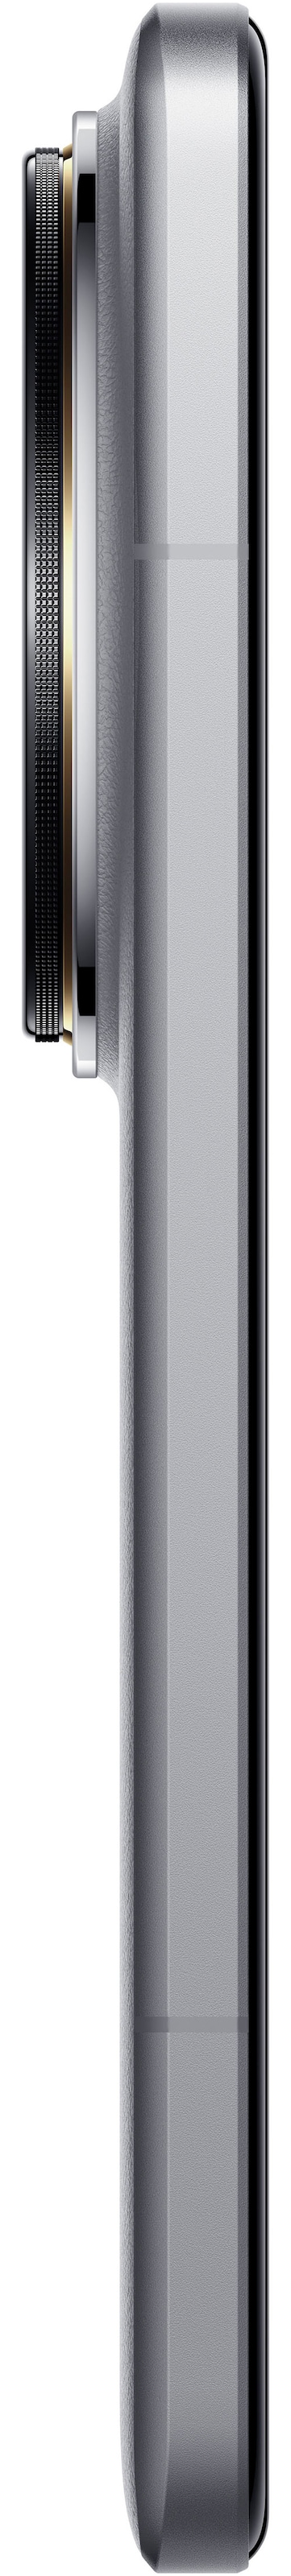 Xiaomi Smartphone »14 Ultra 512GB«, weiß, 17,09 cm/6,73 Zoll, 512 GB Speicherplatz, 50 MP Kamera